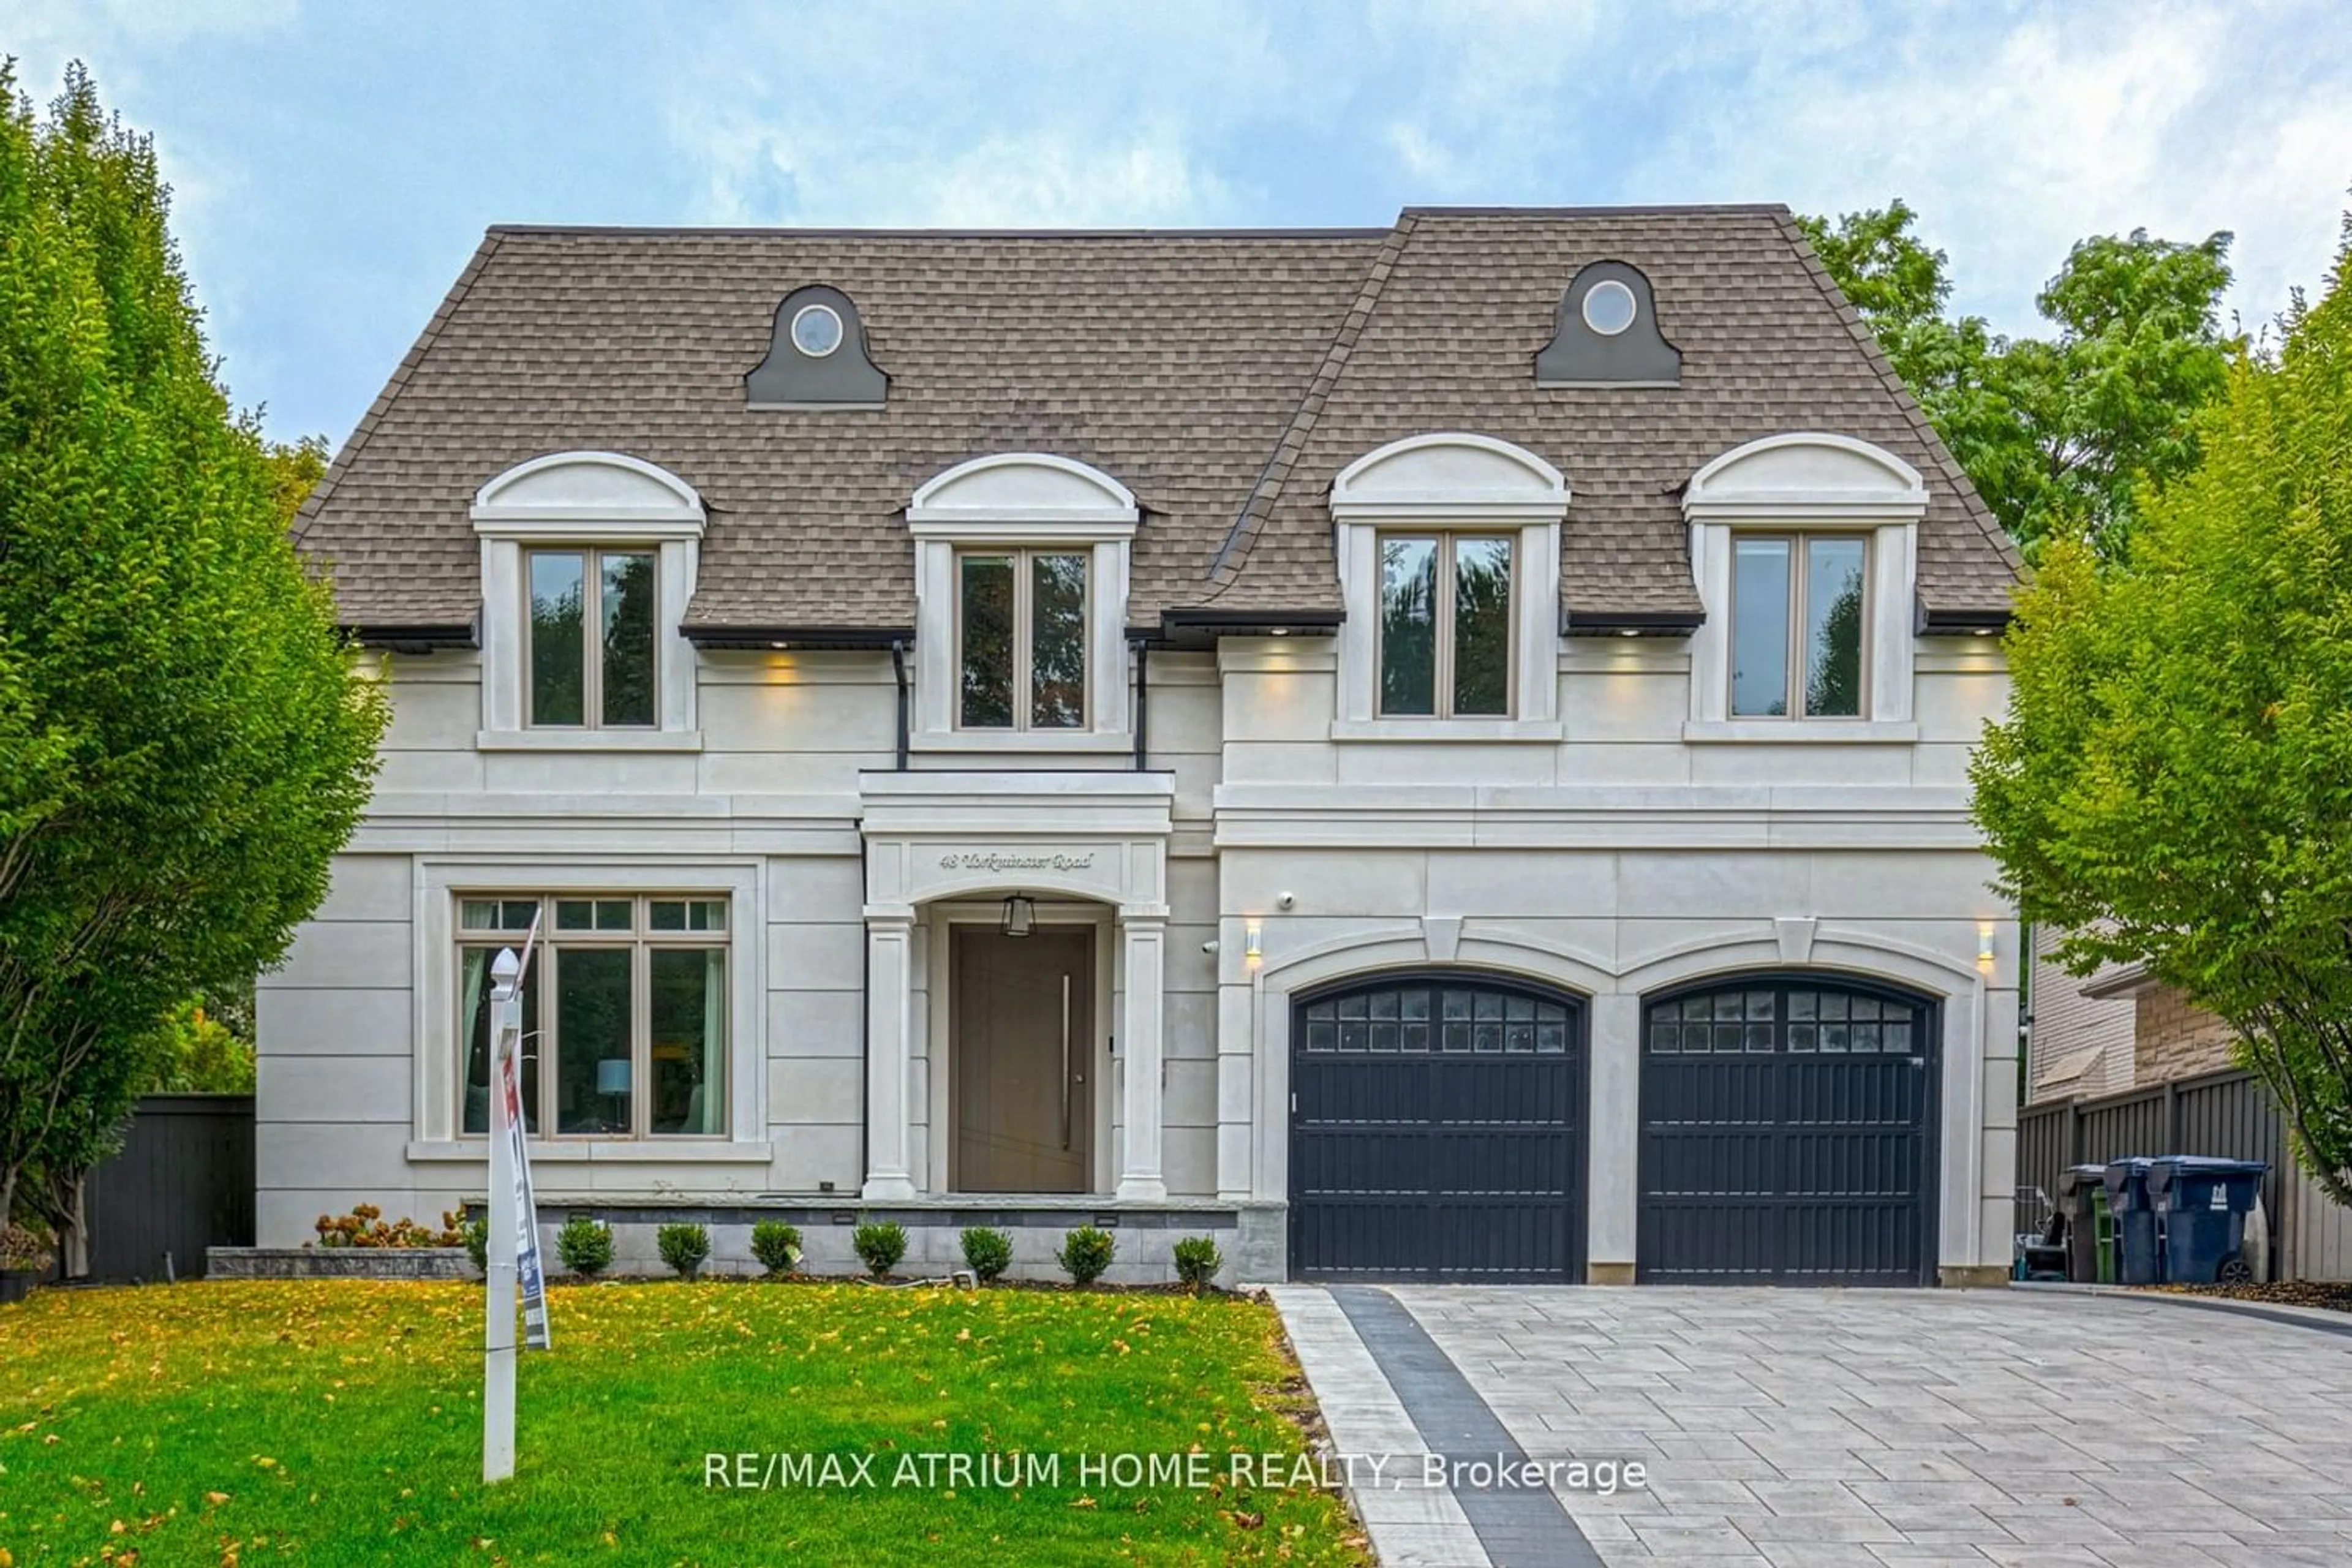 Home with brick exterior material for 48 Yorkminster Rd, Toronto Ontario M2P 1M3